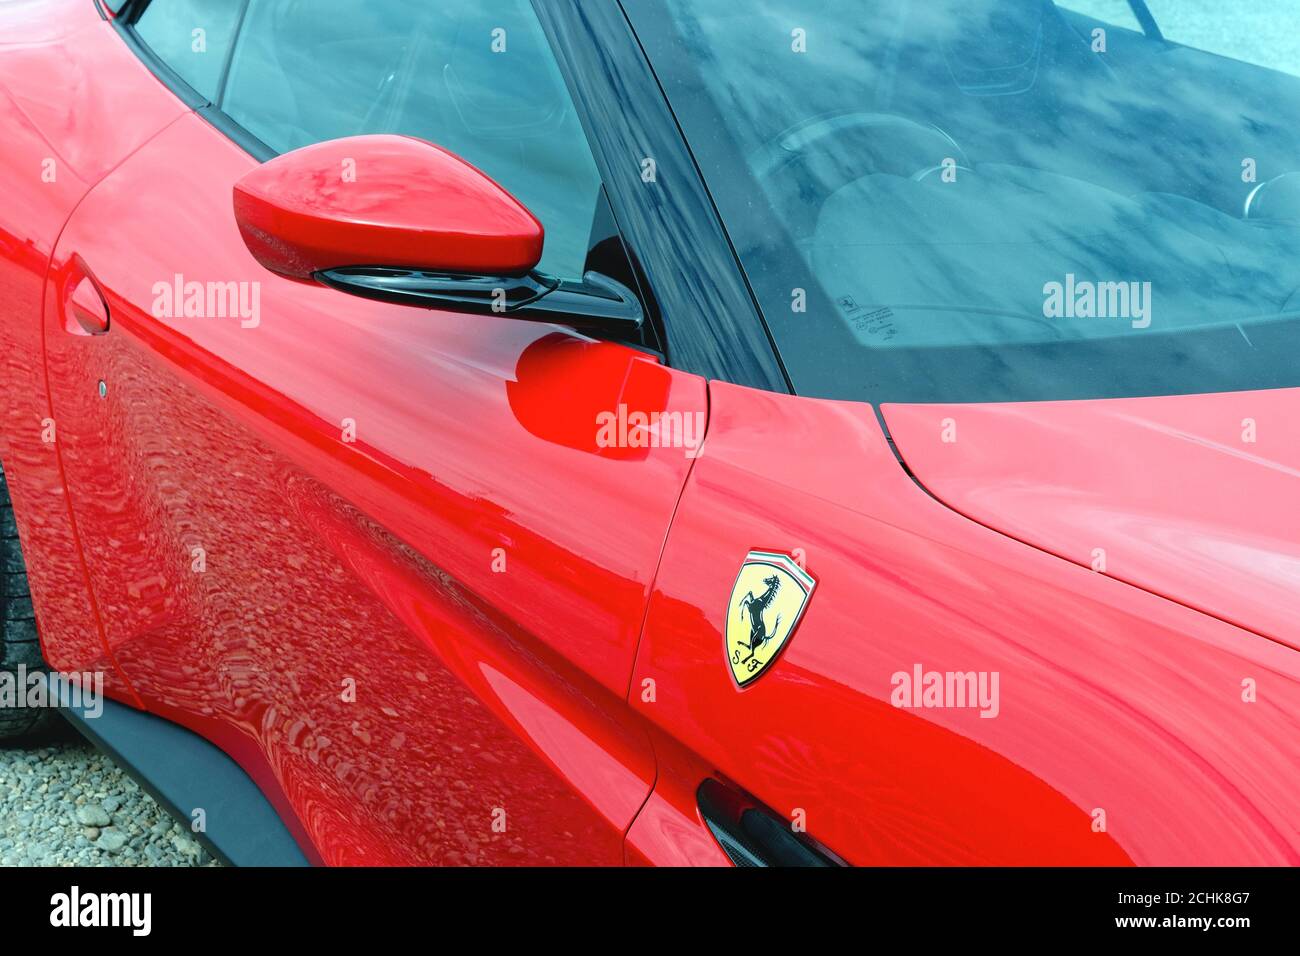 Detail of a red Portofino  Ferrari sports car Stock Photo